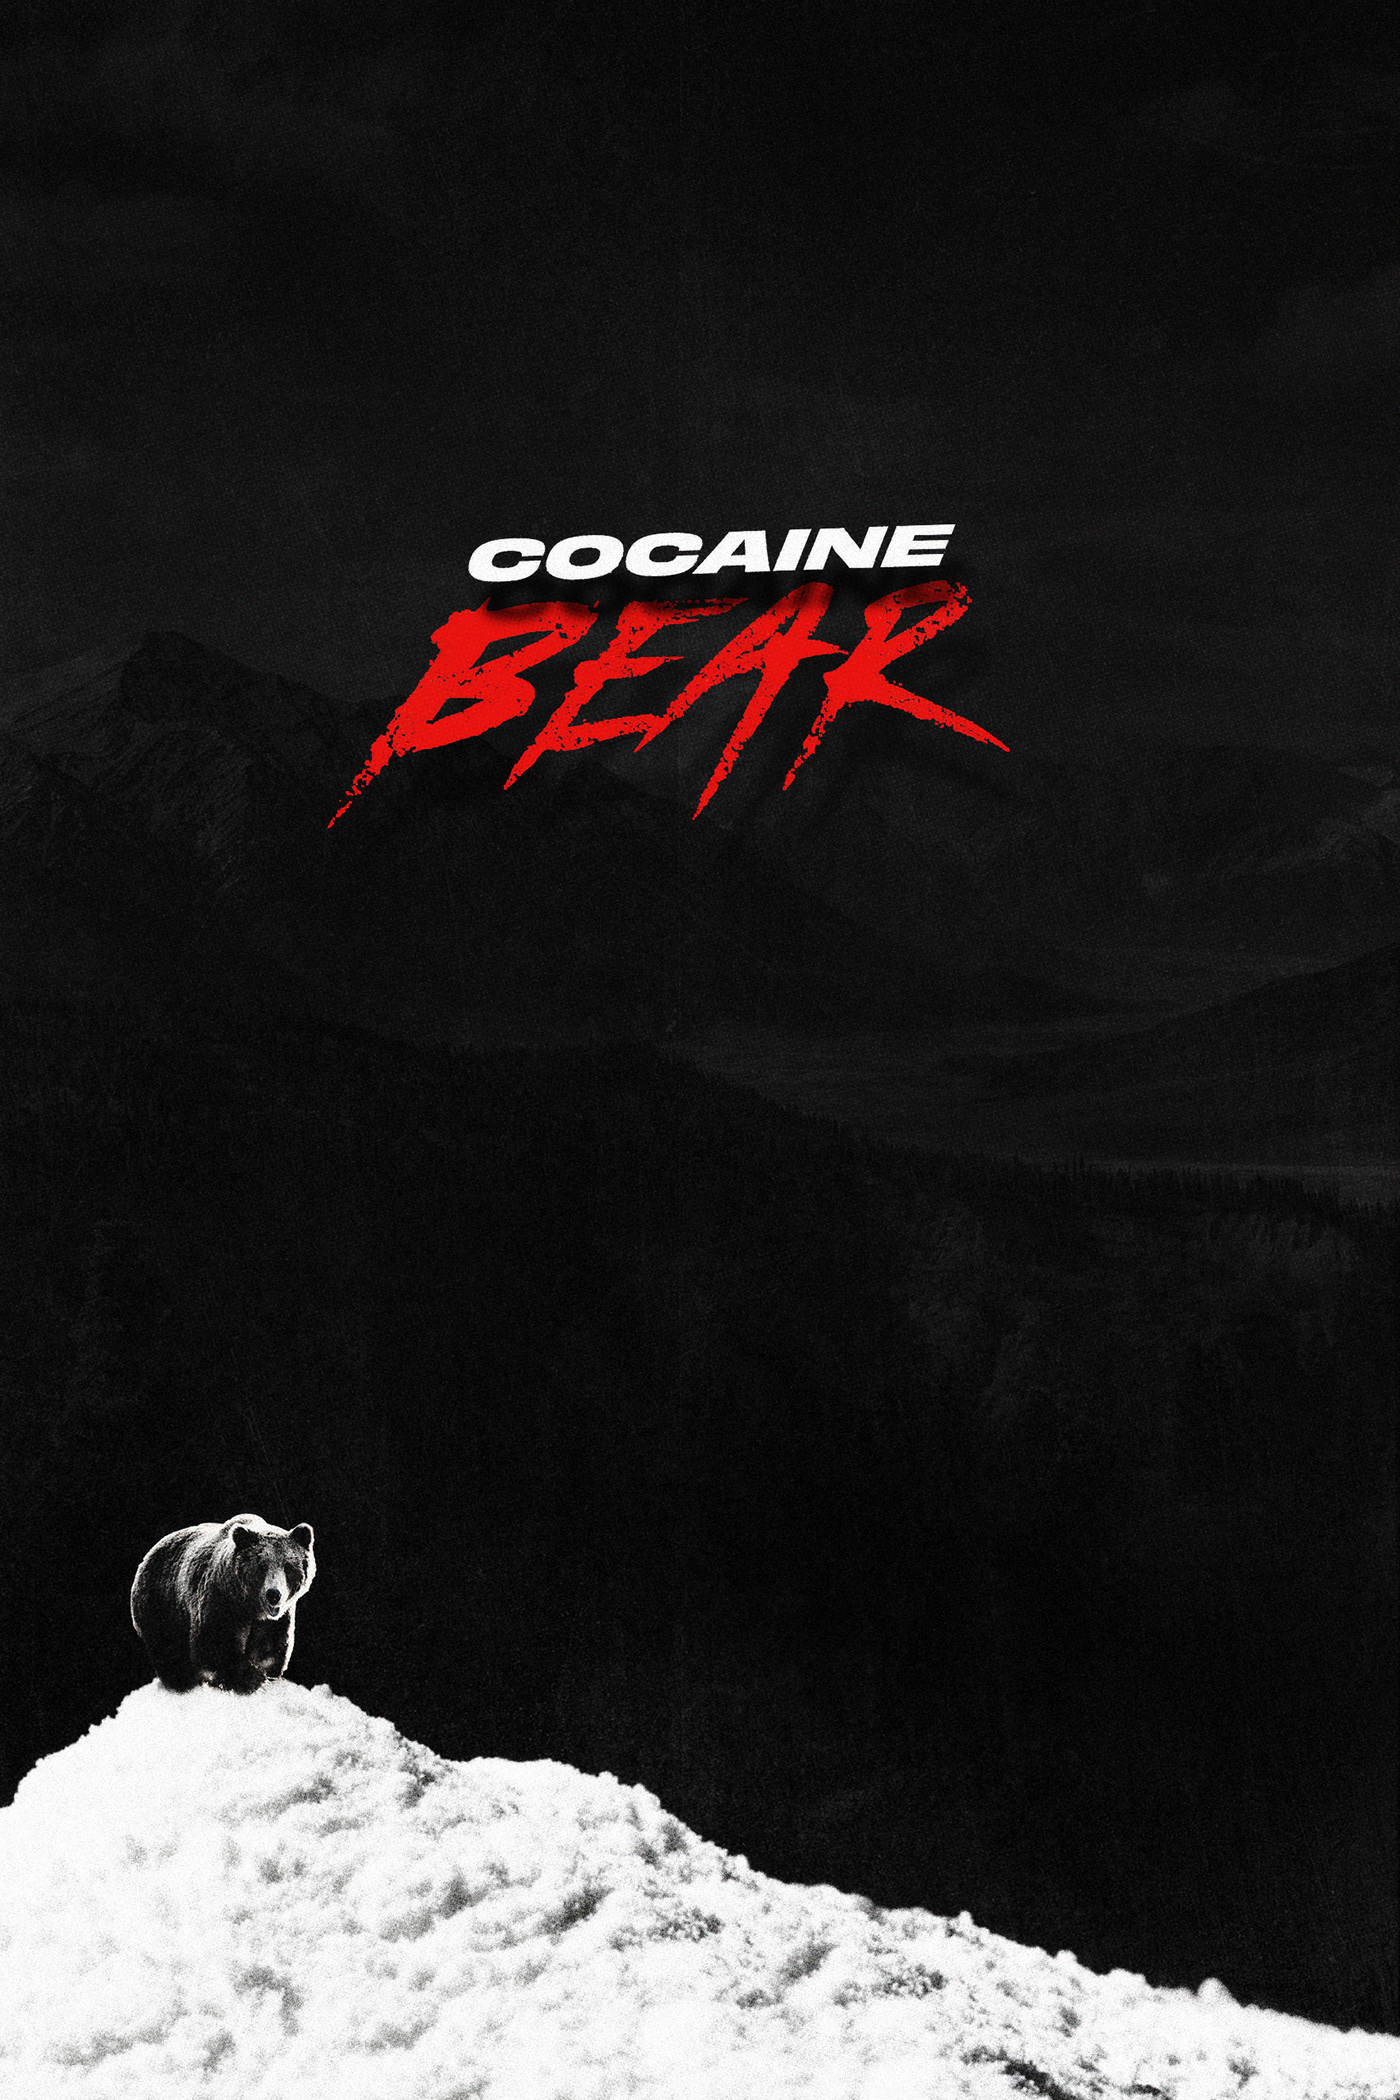 Elizabeth Banks' 'Cocaine Bear'